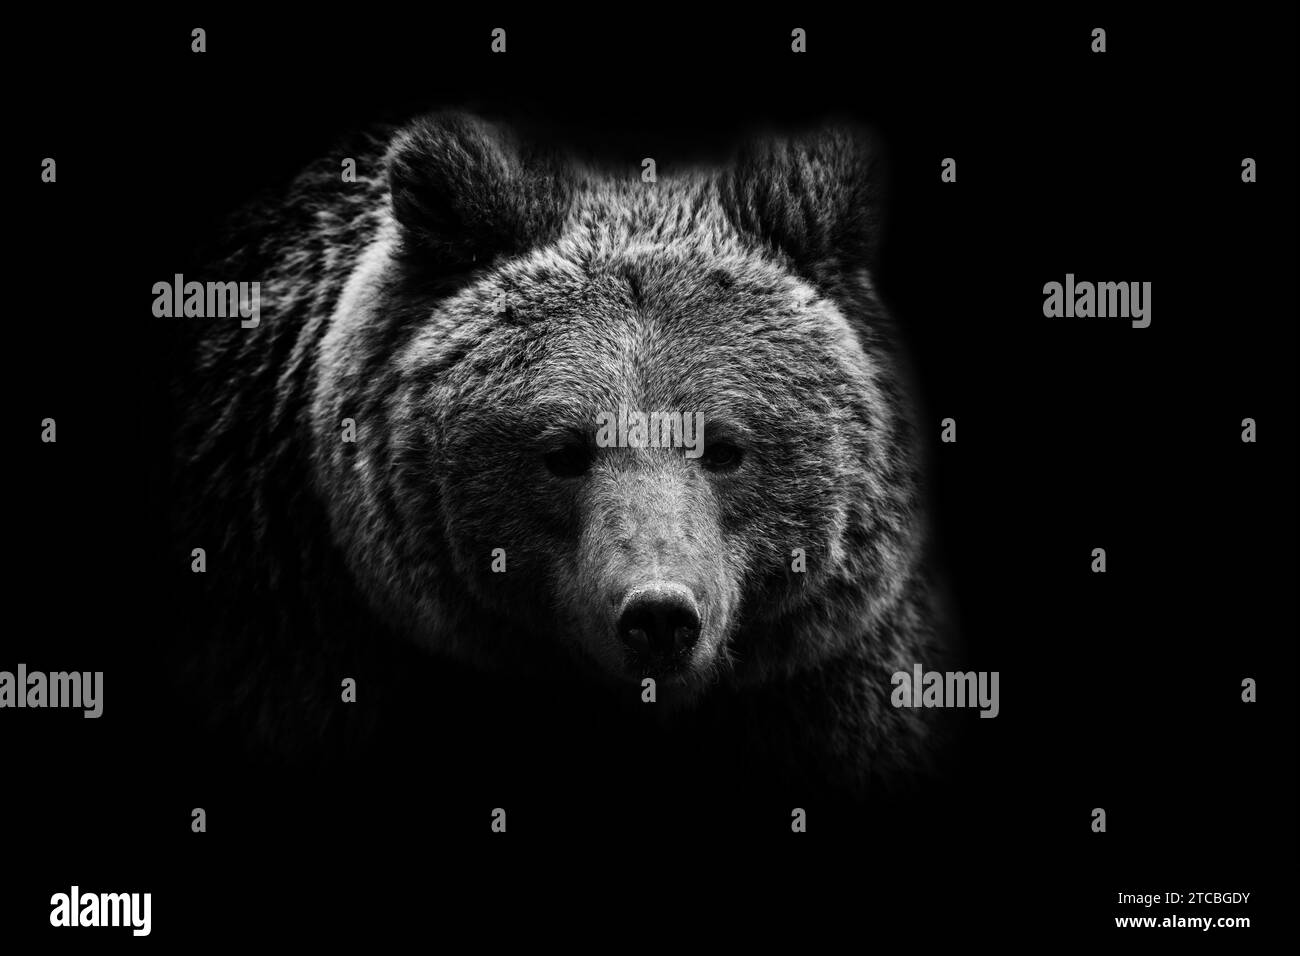 Close up black and white adult bear portrait. Animal on dark background Stock Photo